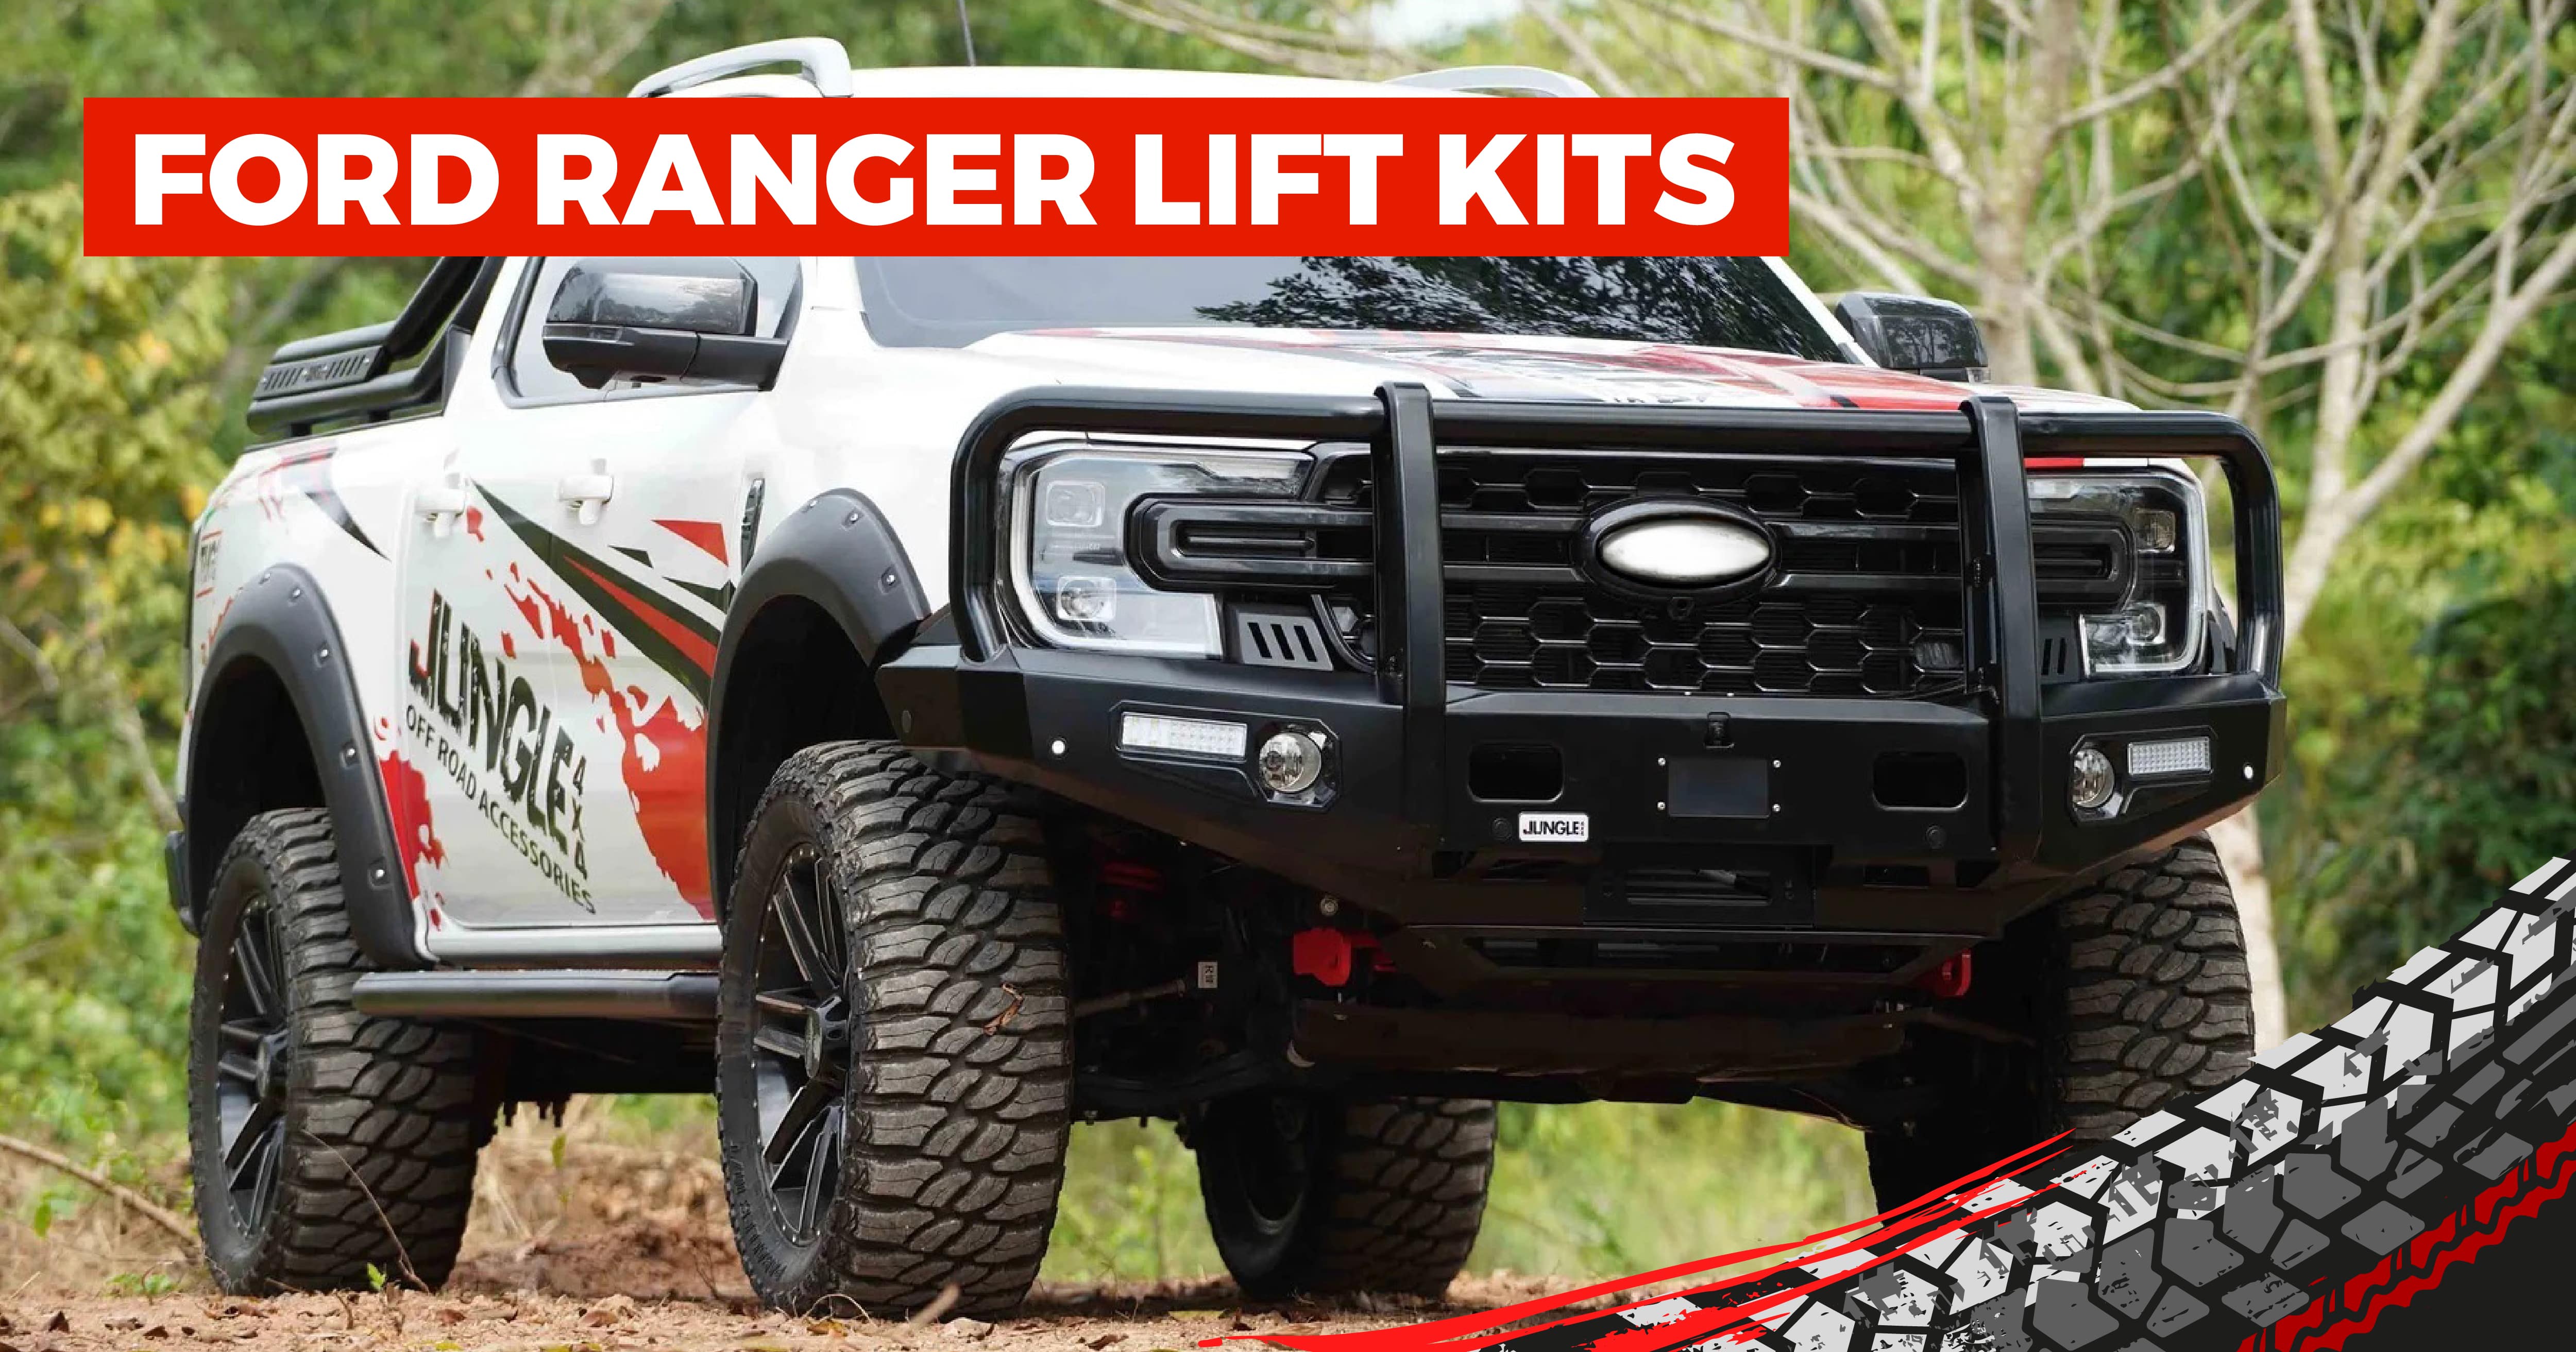 Ford Ranger Lift Kits